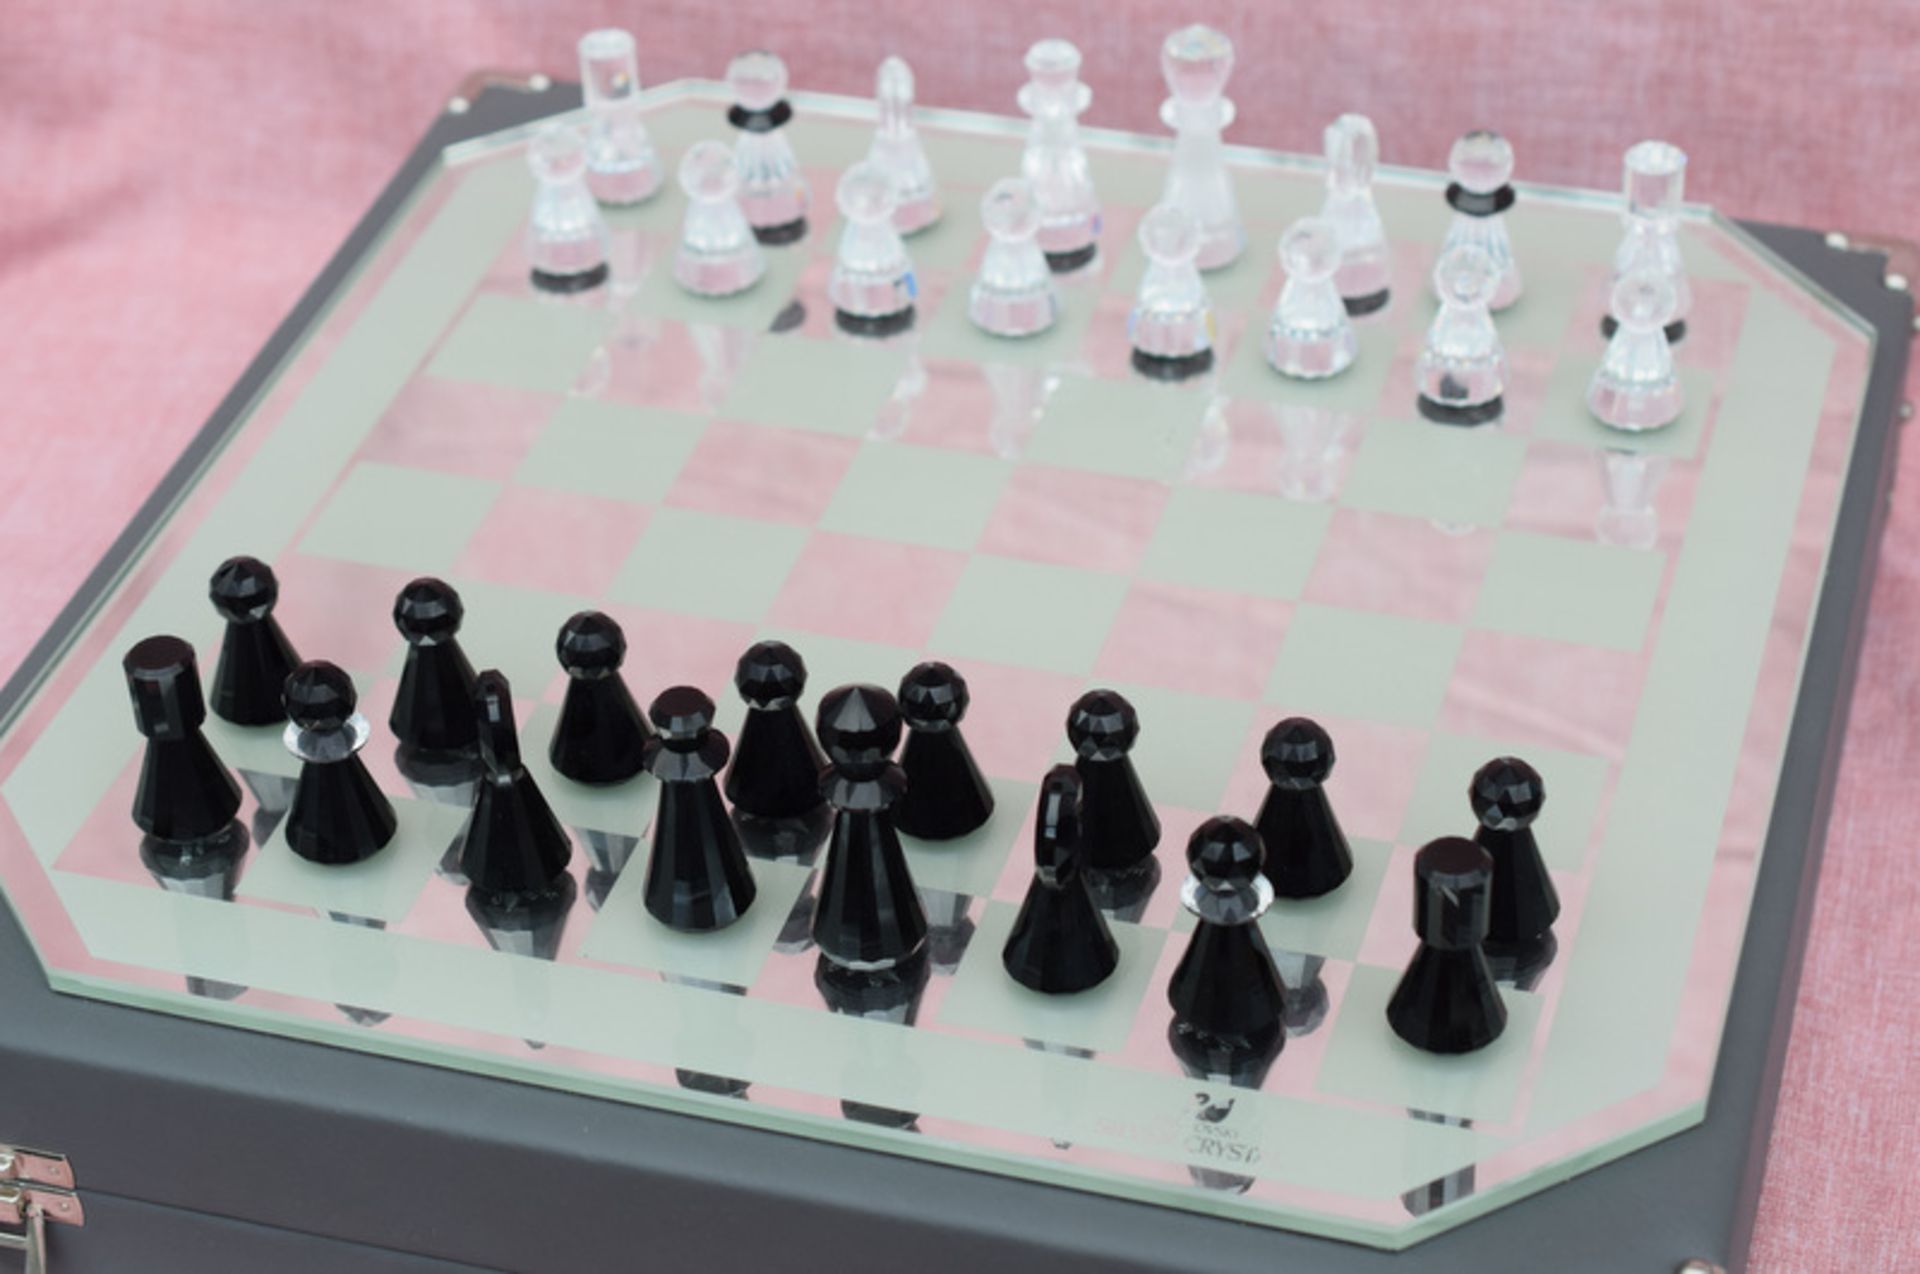 Swarovski Silver Crystal Chess Set Like New In Box